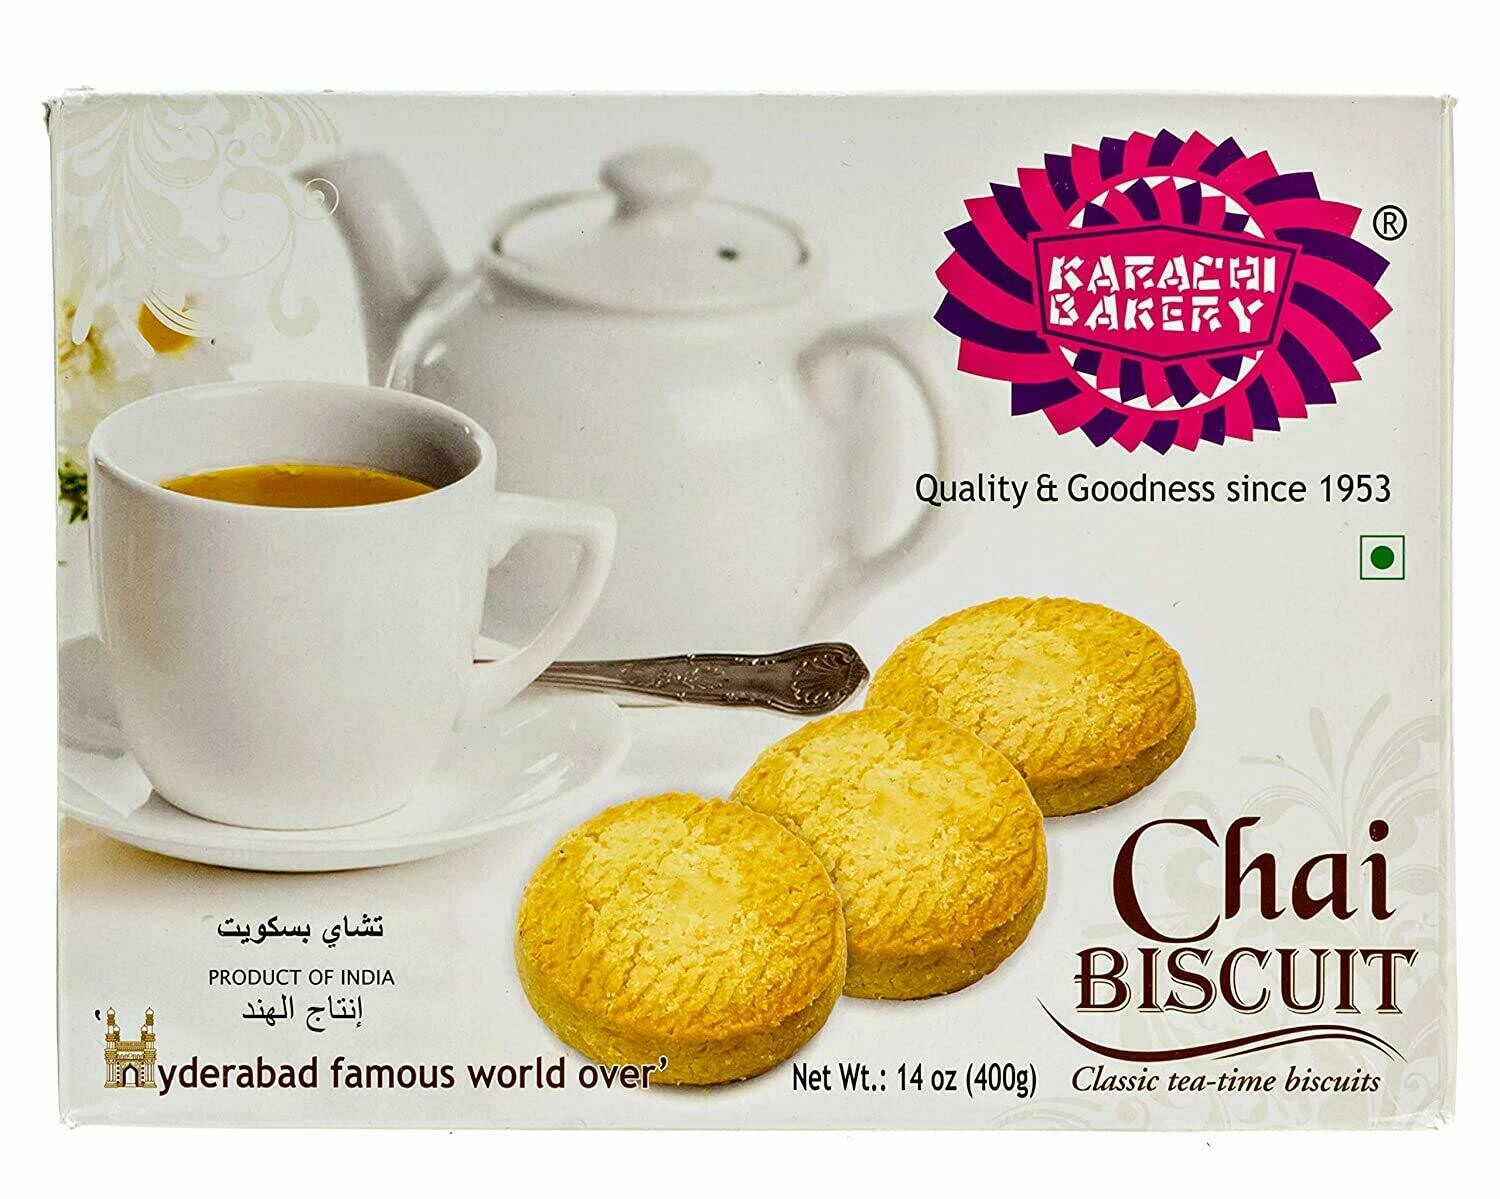 Karachi Bakery - Chai Biscuits 400g